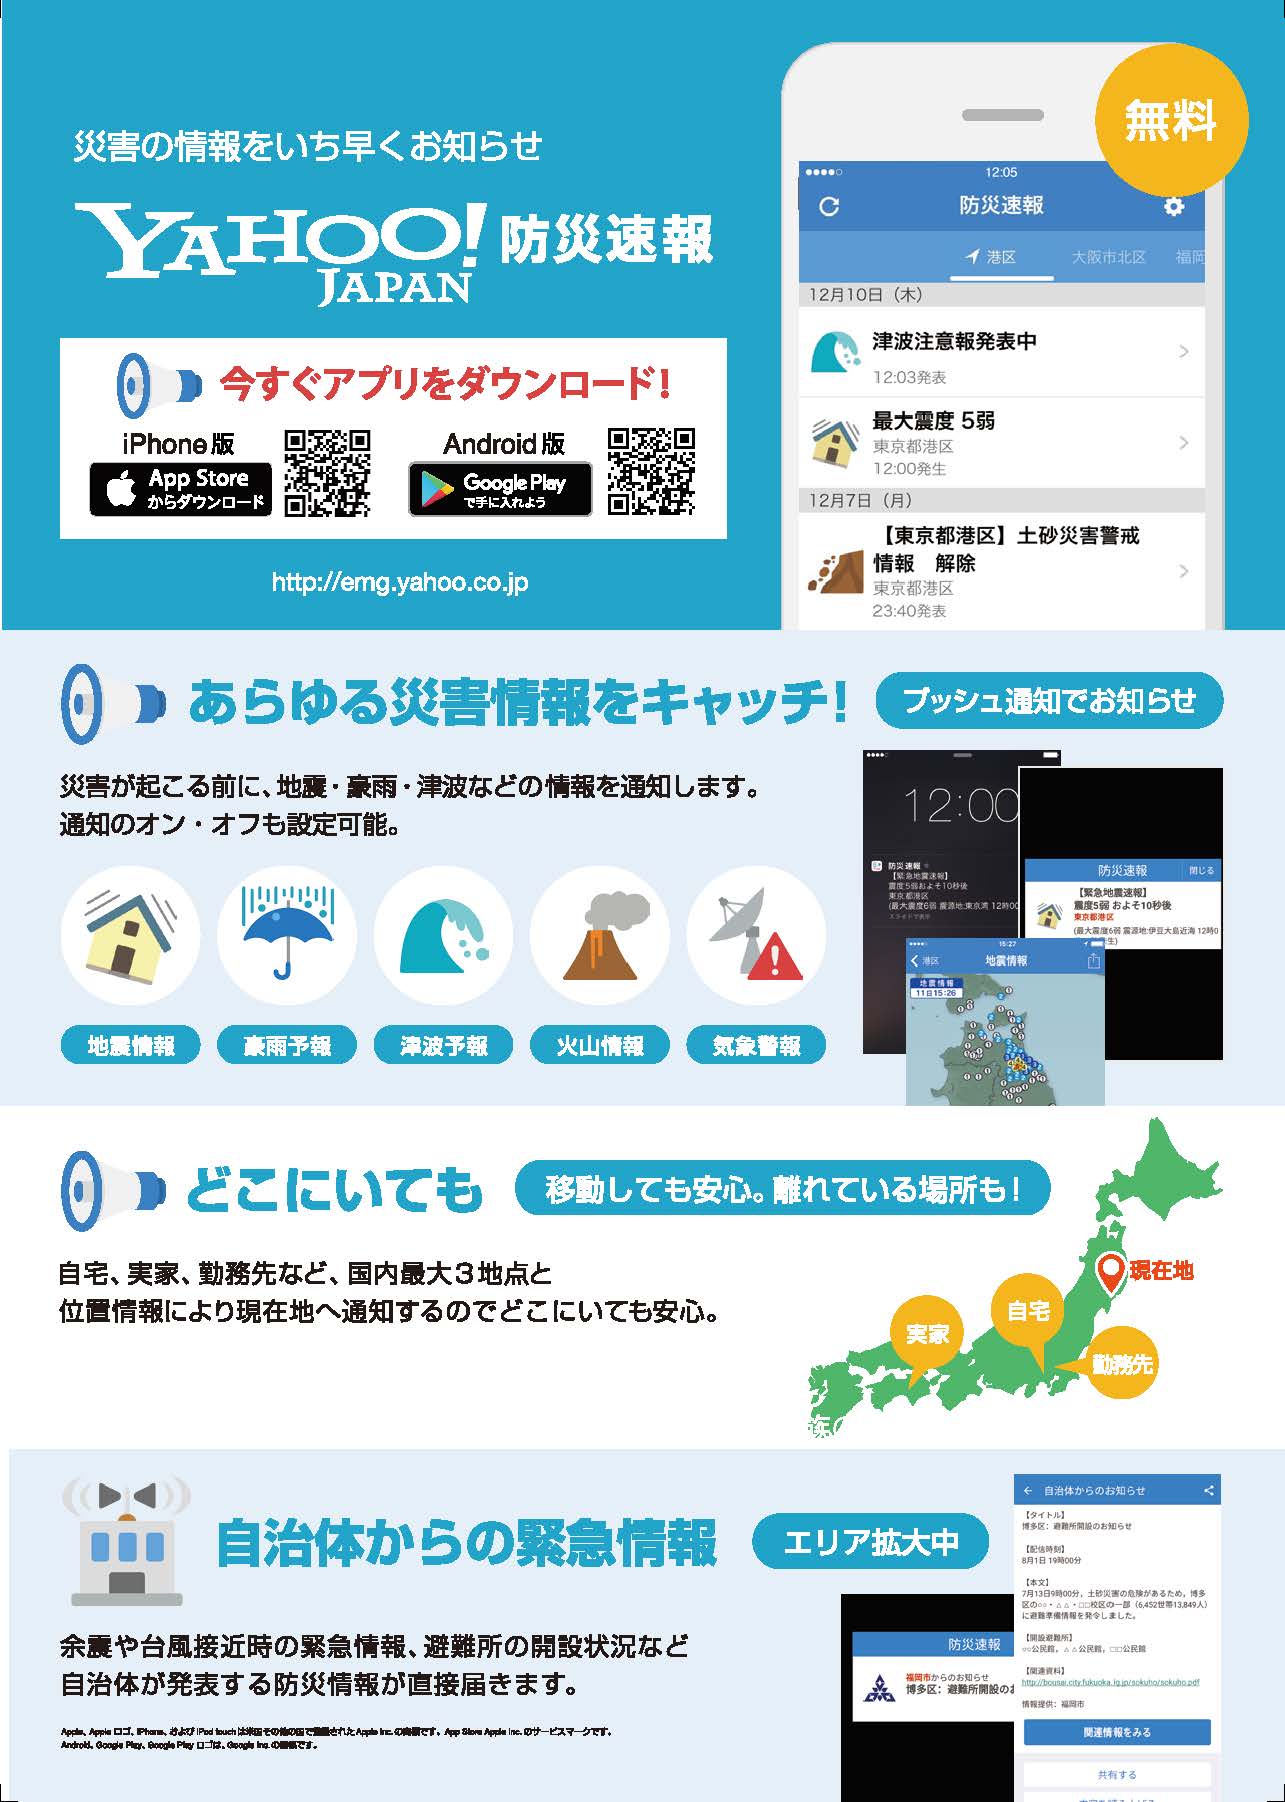 http://www.town.kagamiishi.fukushima.jp/kurashi/files/2016/12/07/%E3%83%81%E3%83%A9%E3%82%B7.jpg